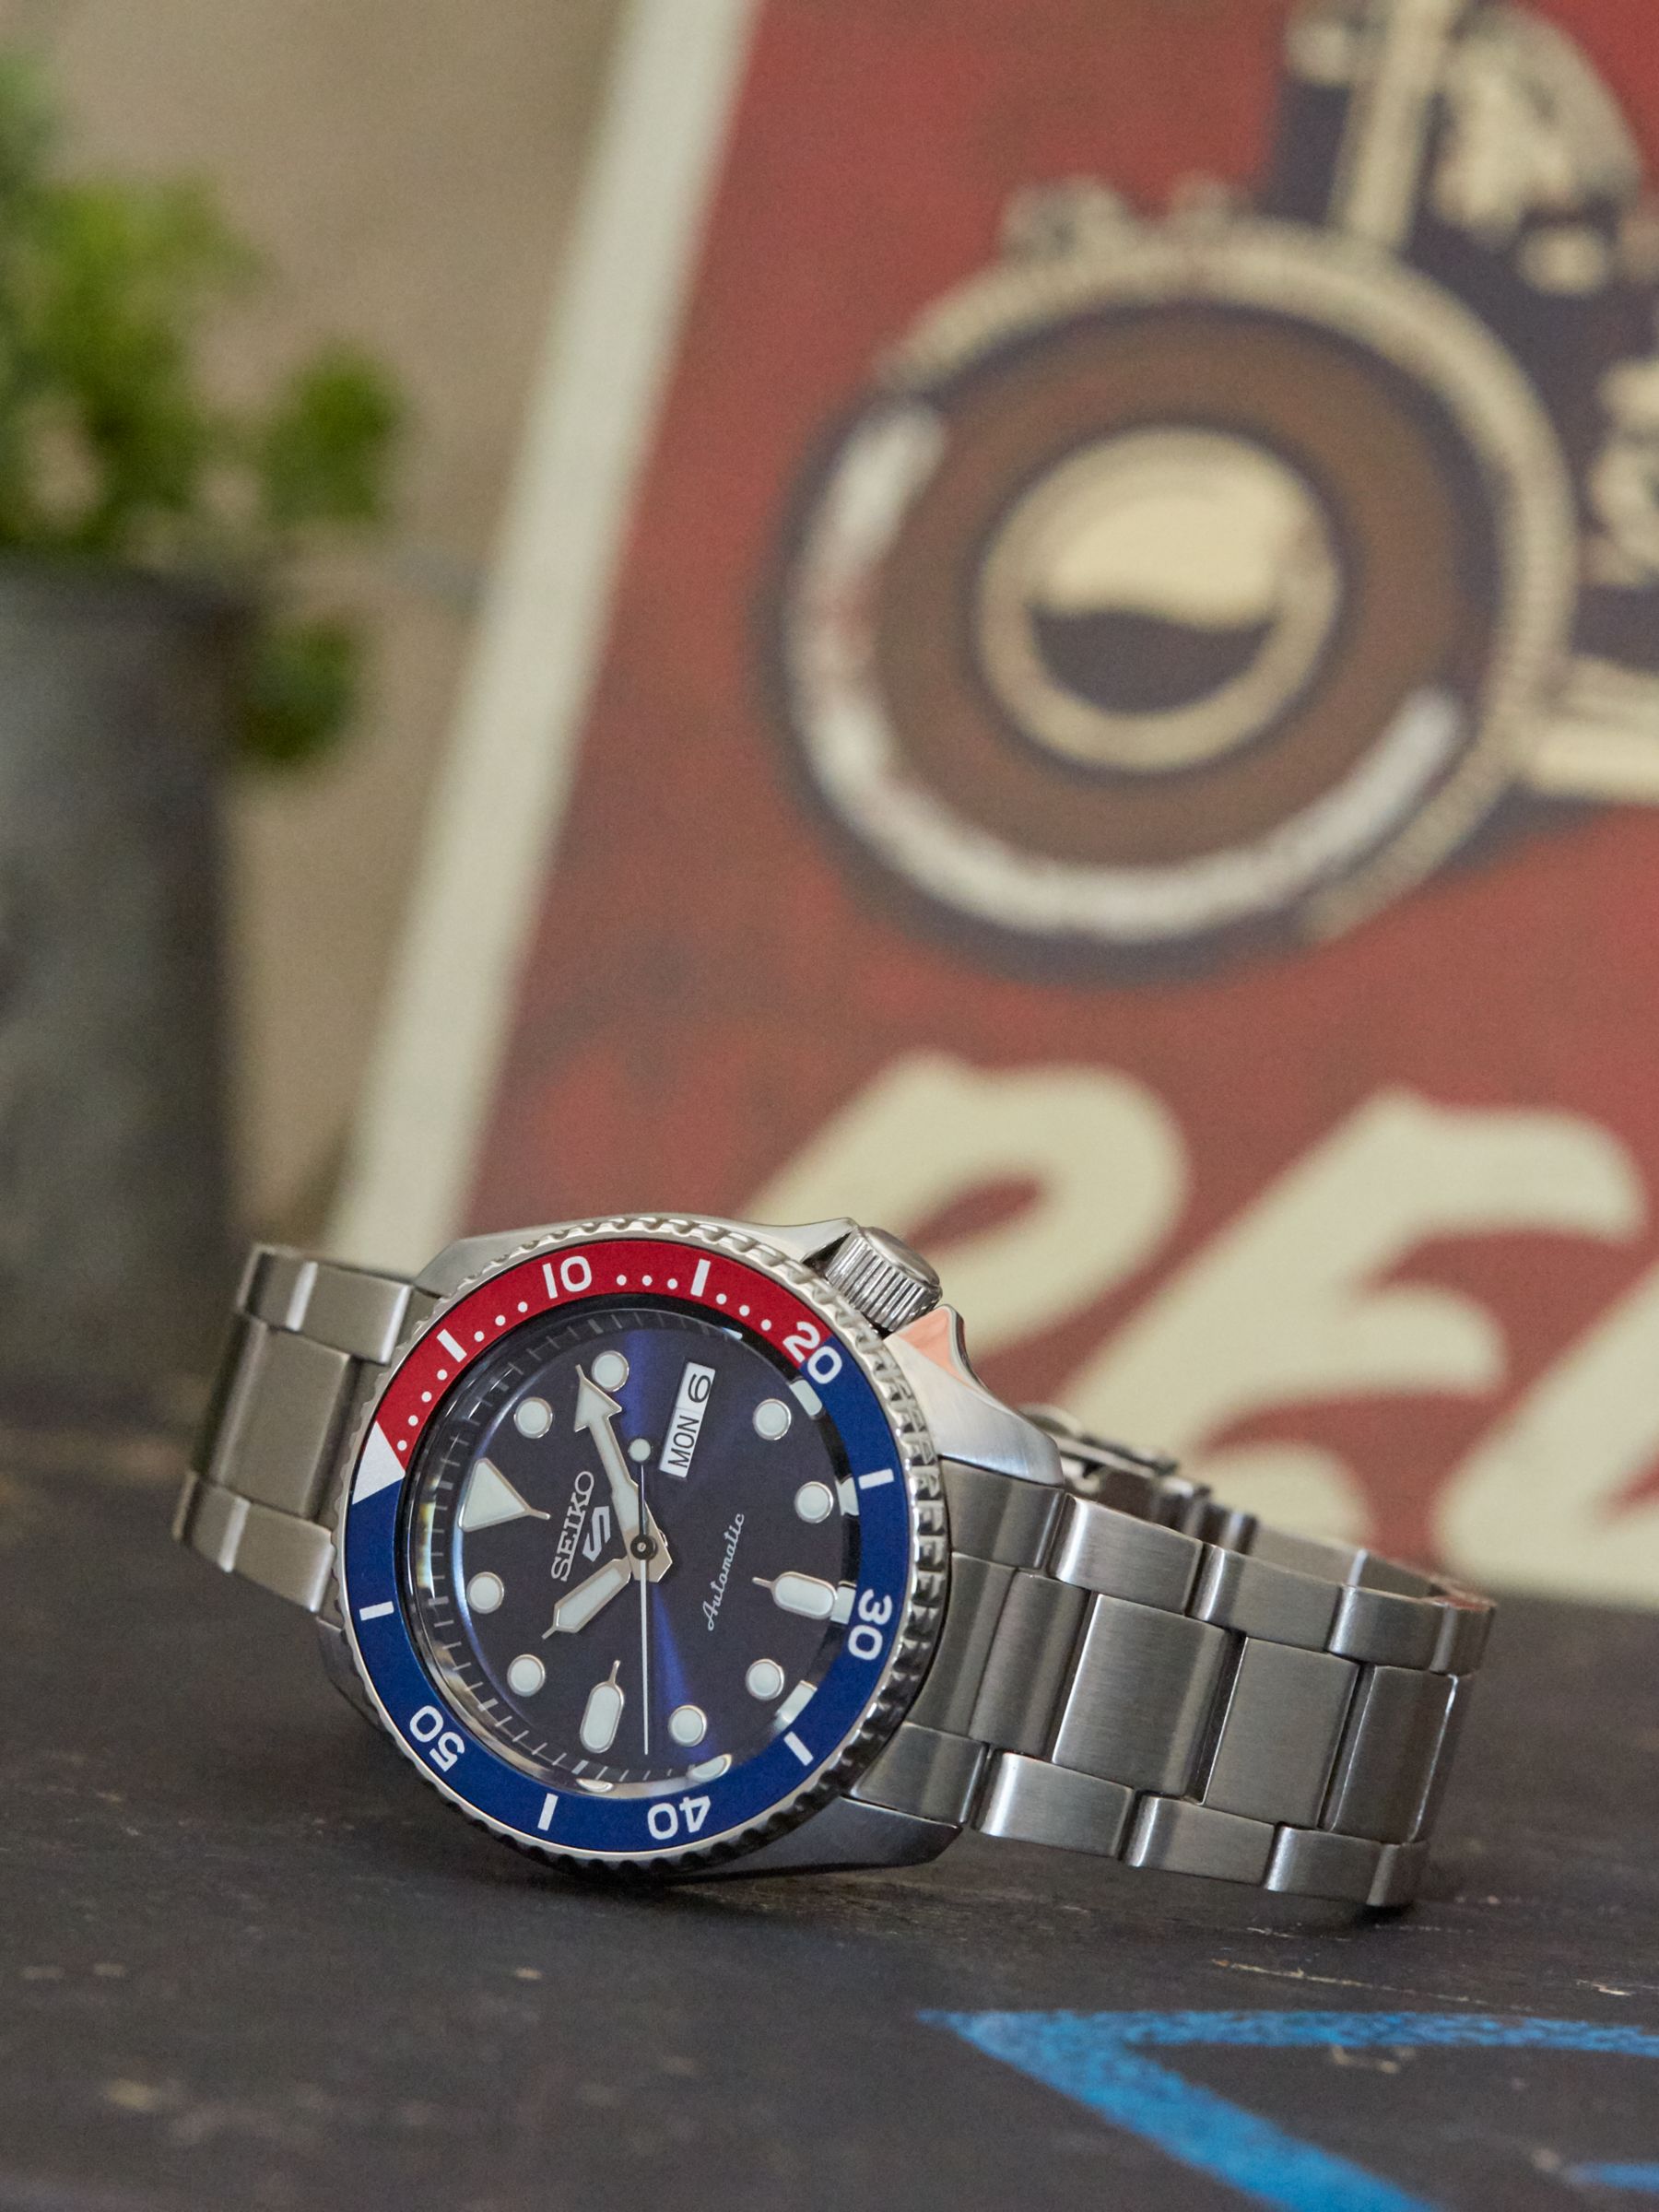 Buy Seiko SRPD53K1 Men's 5 Sports Automatic Day Date Bracelet Strap Watch, Silver/Blue Online at johnlewis.com